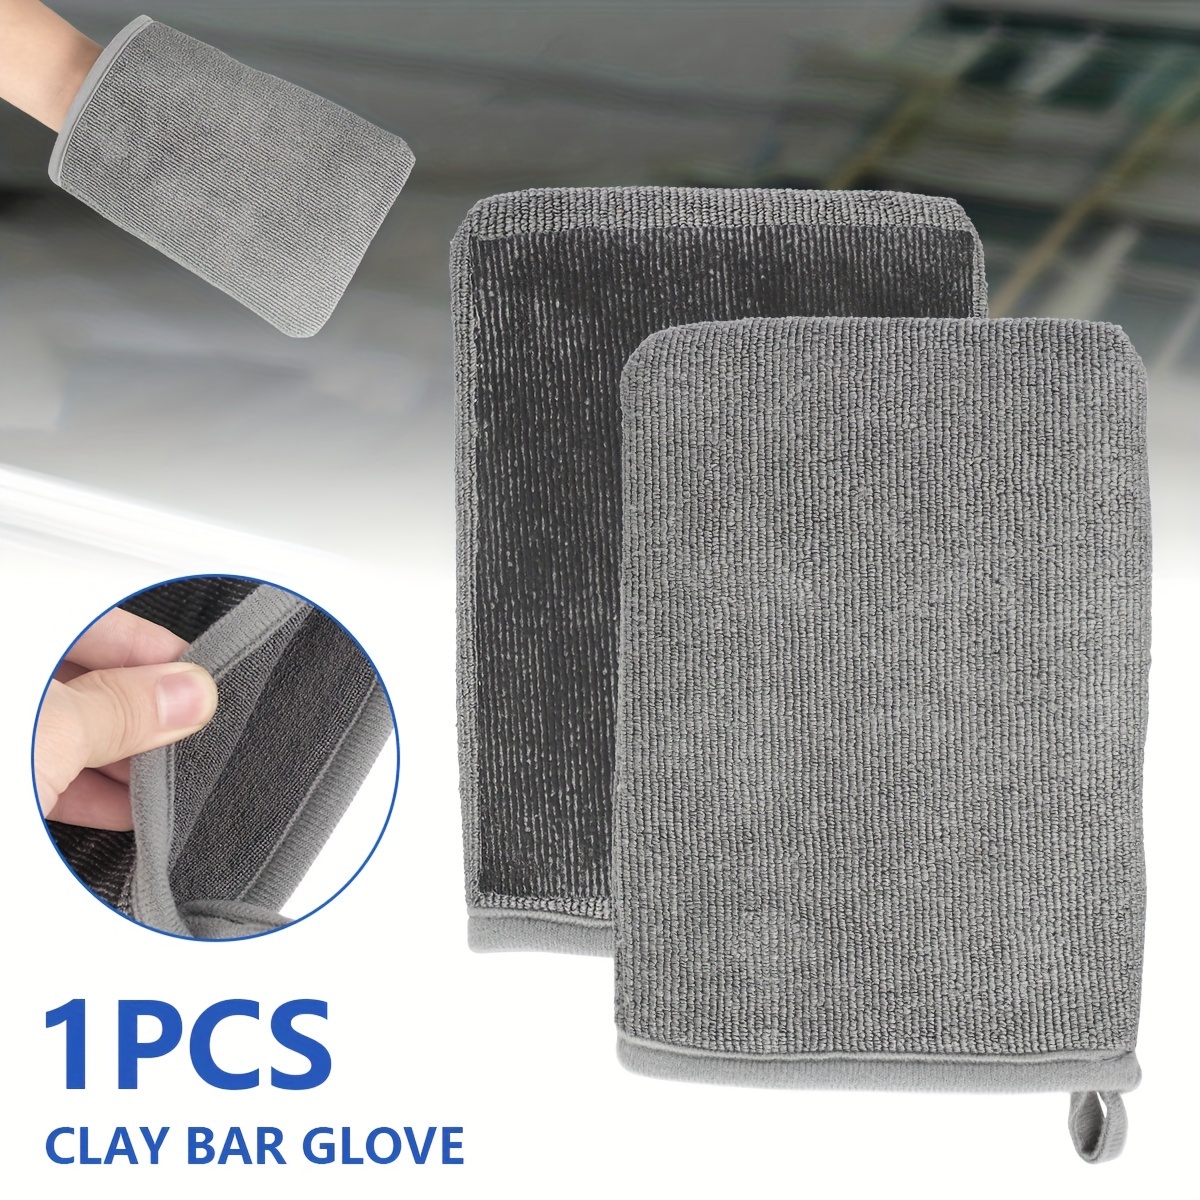 Clay Mitt, Clay Bar, Clay Bar Kit